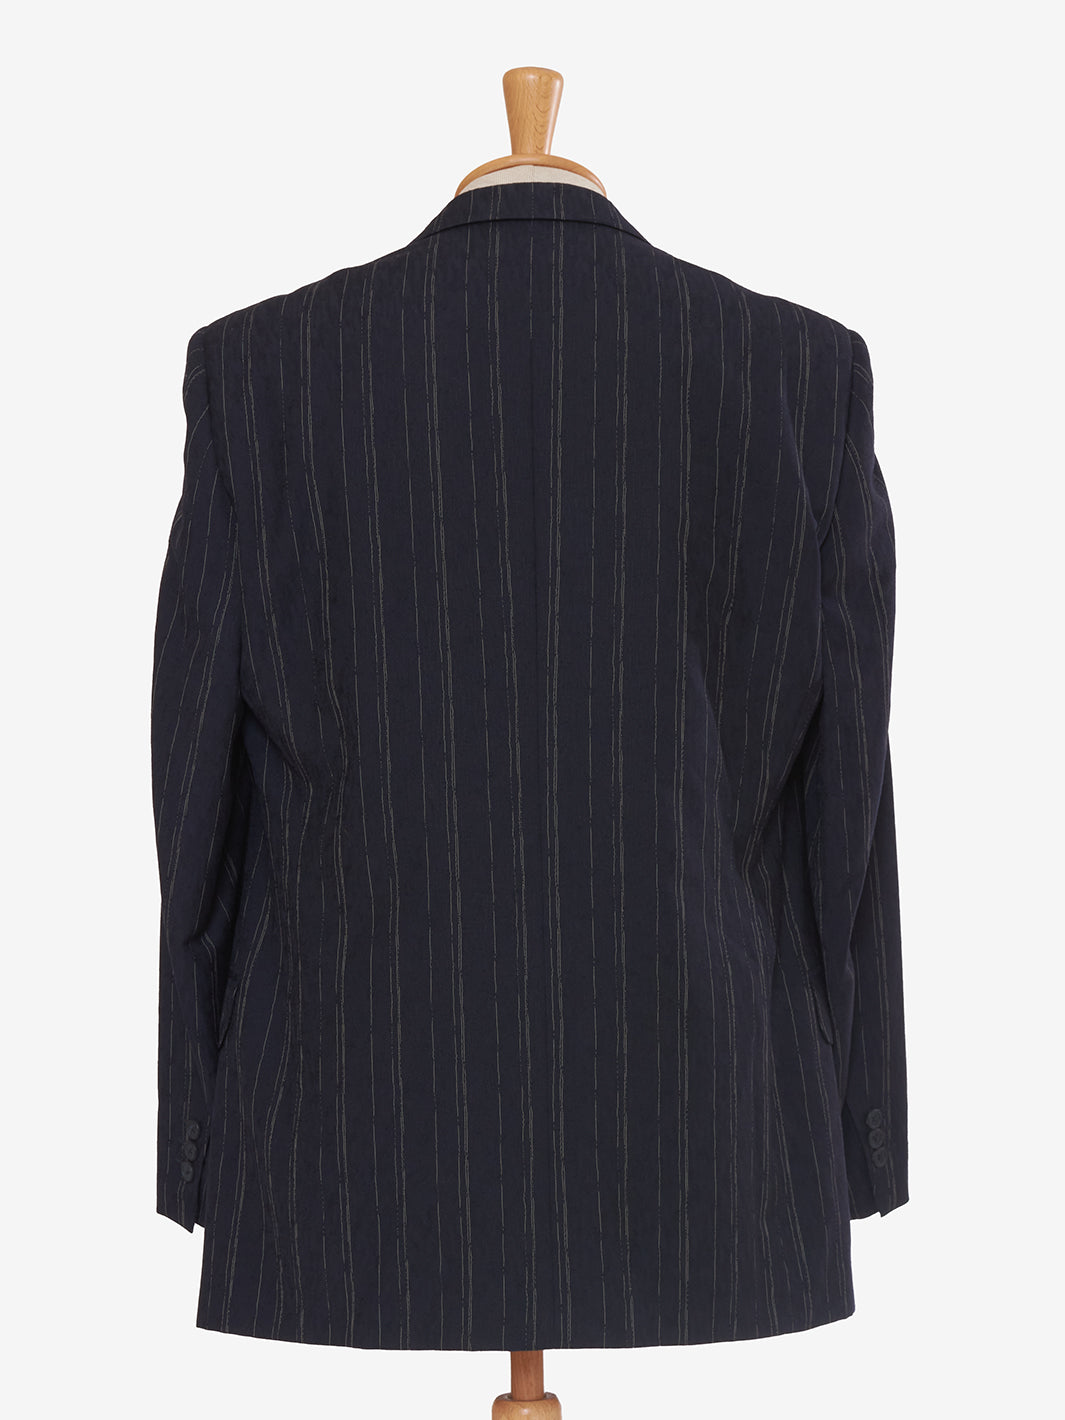 Gianni Versace Blue pinstripe suit in cool wool